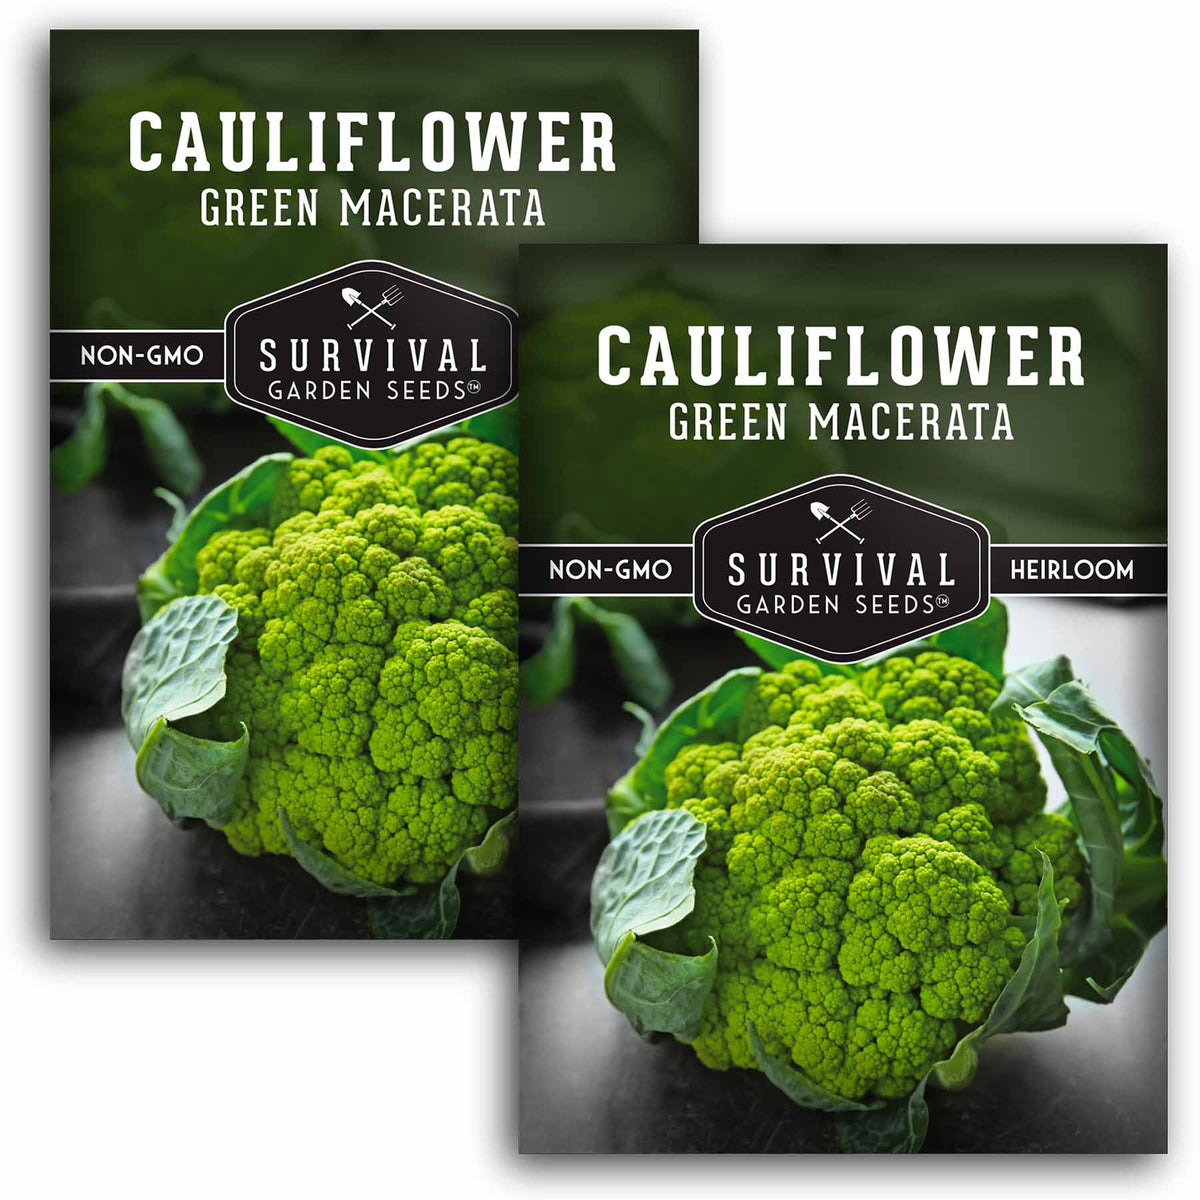 2 packets of Green Macerata Cauliflower seeds